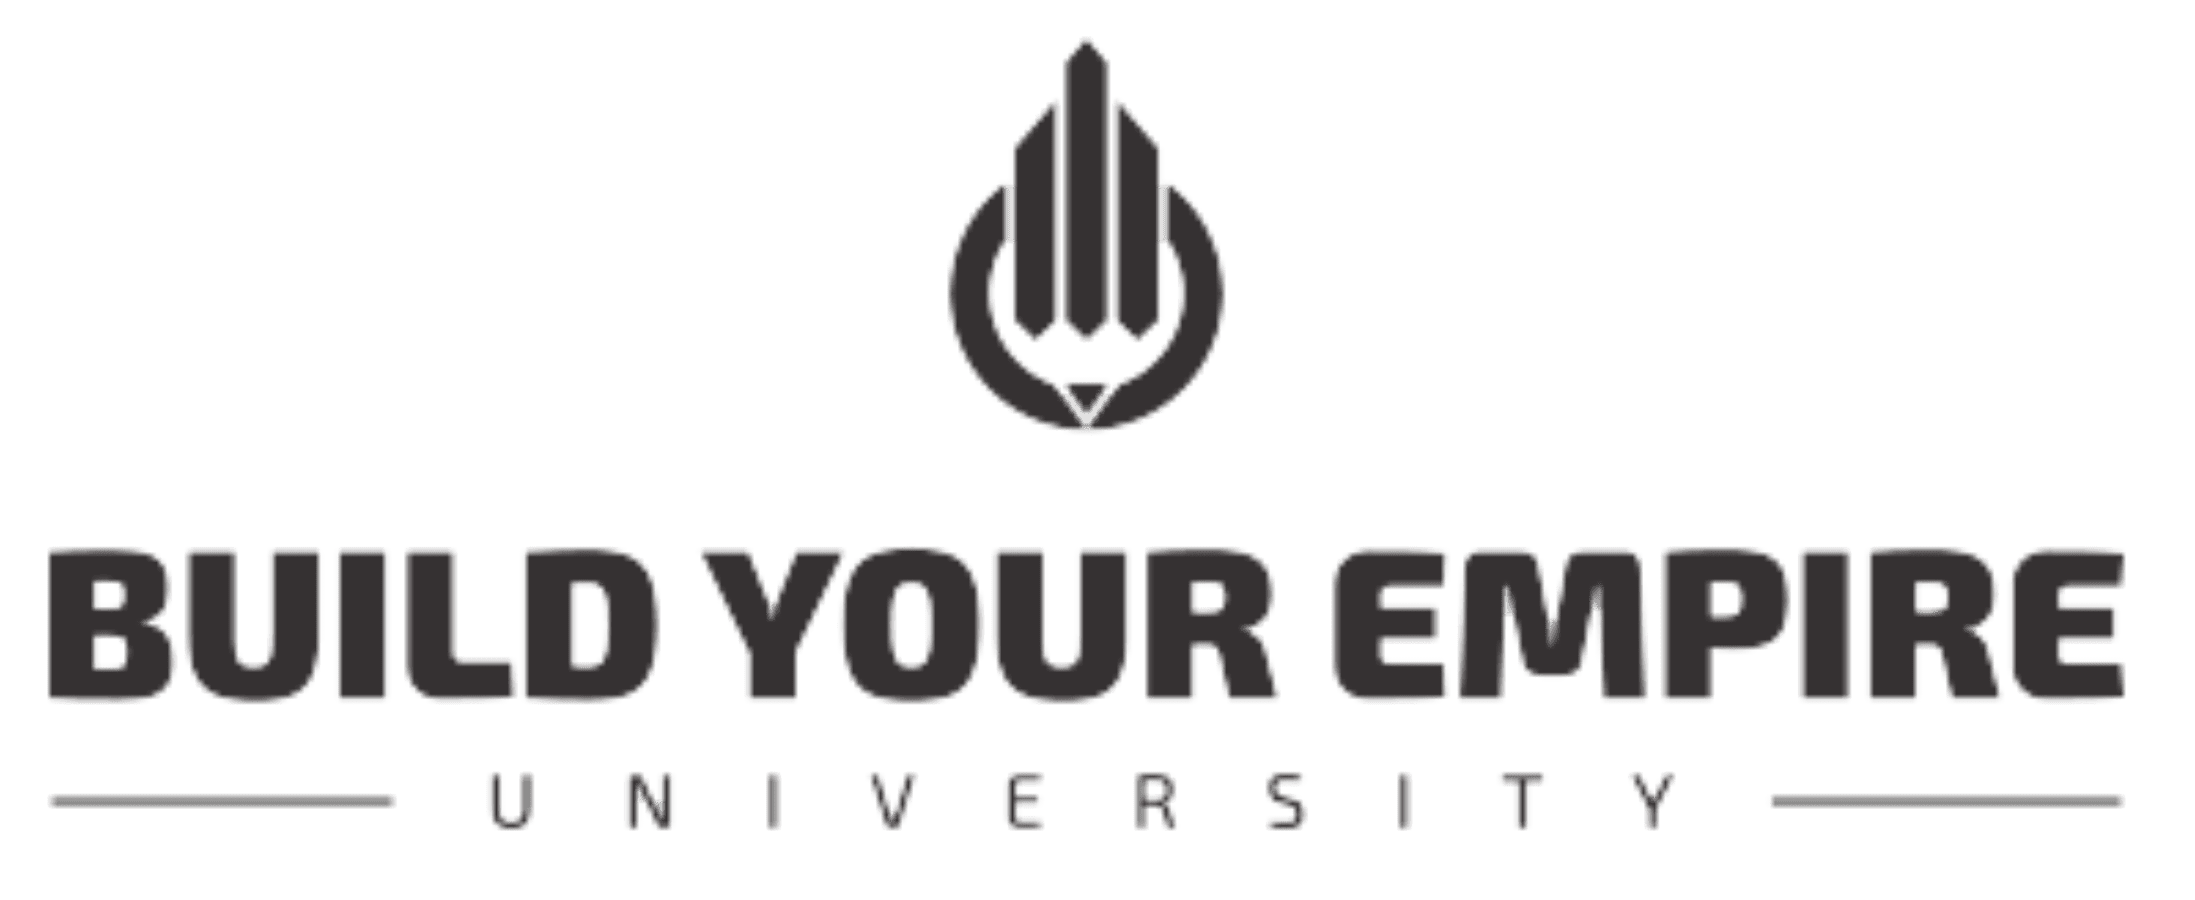 build your empire university